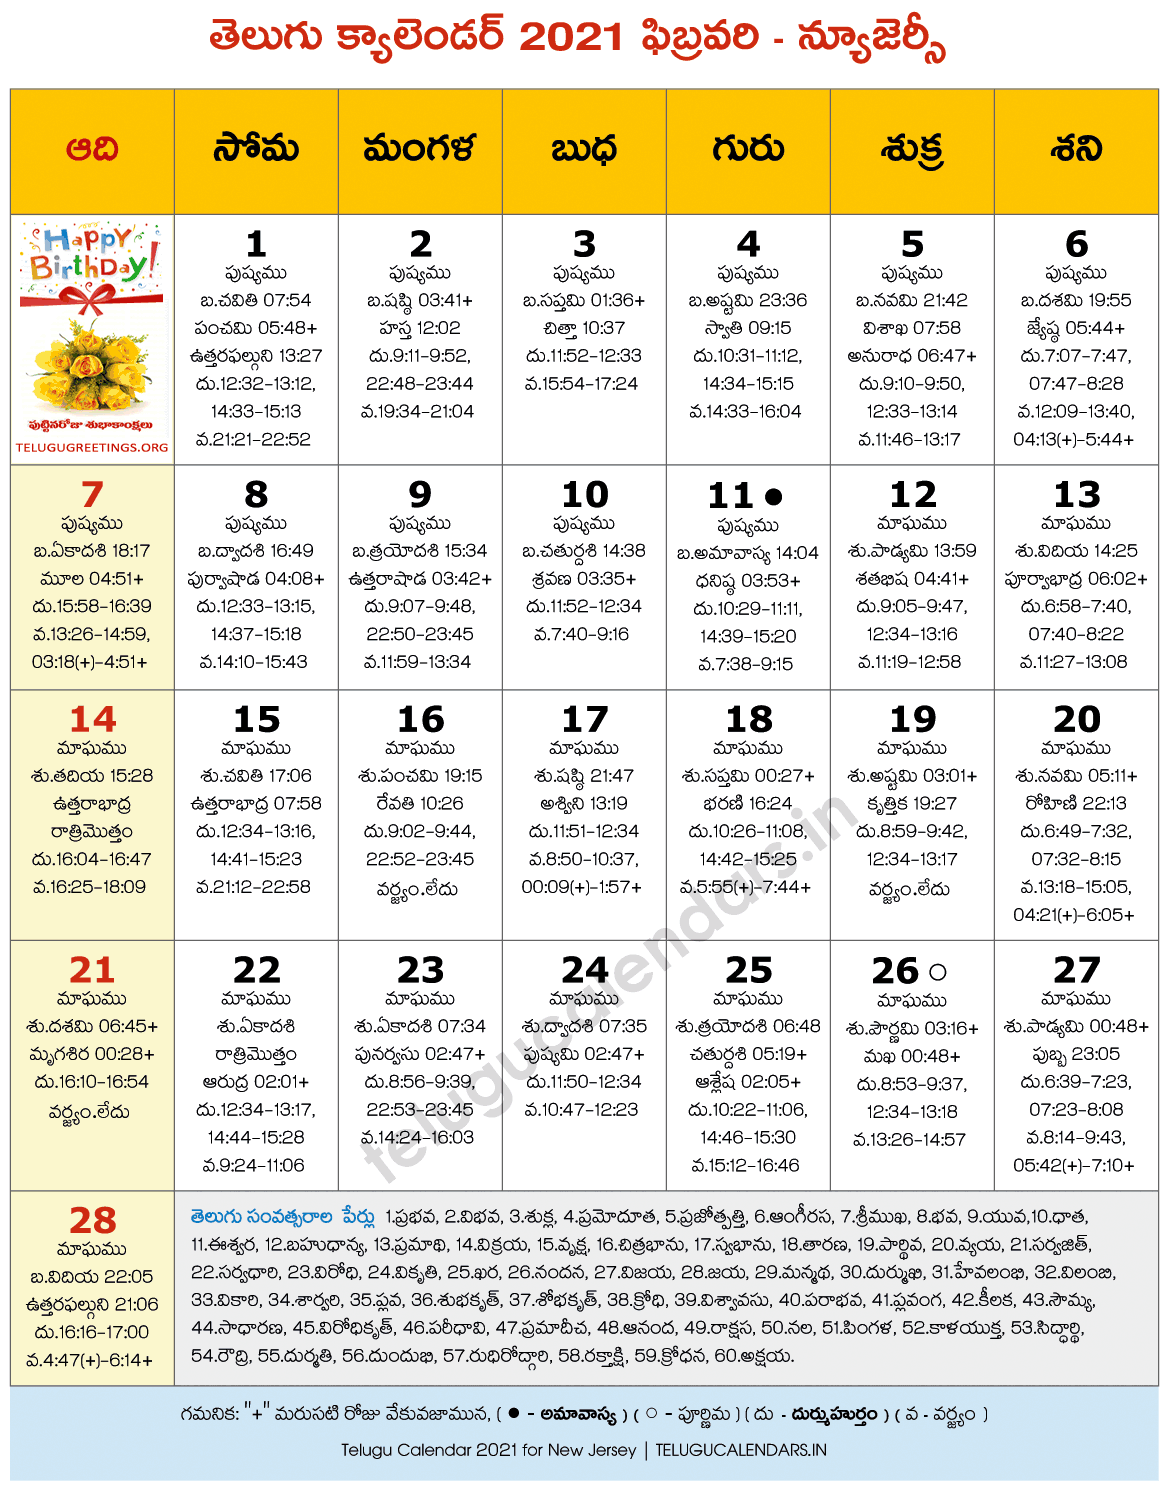 Nj Telugu Calendar 2022 New Jersey 2021 February Telugu Calendar - 2022 Telugu Calendar Pdf